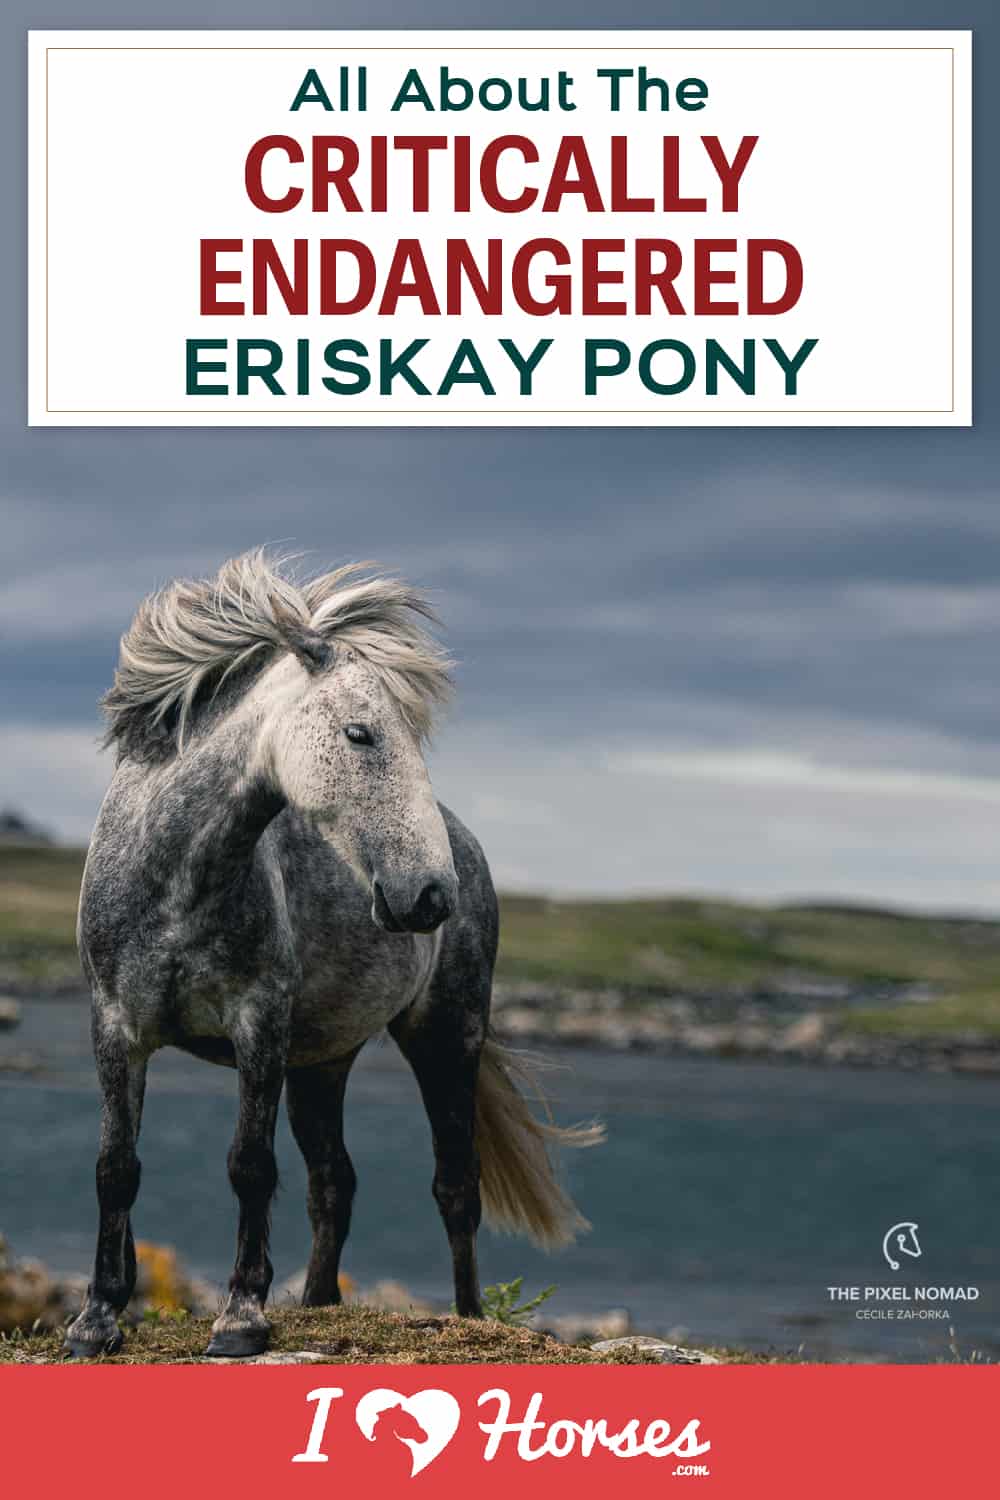 Meet The Critically Endangered Eriskay Pony